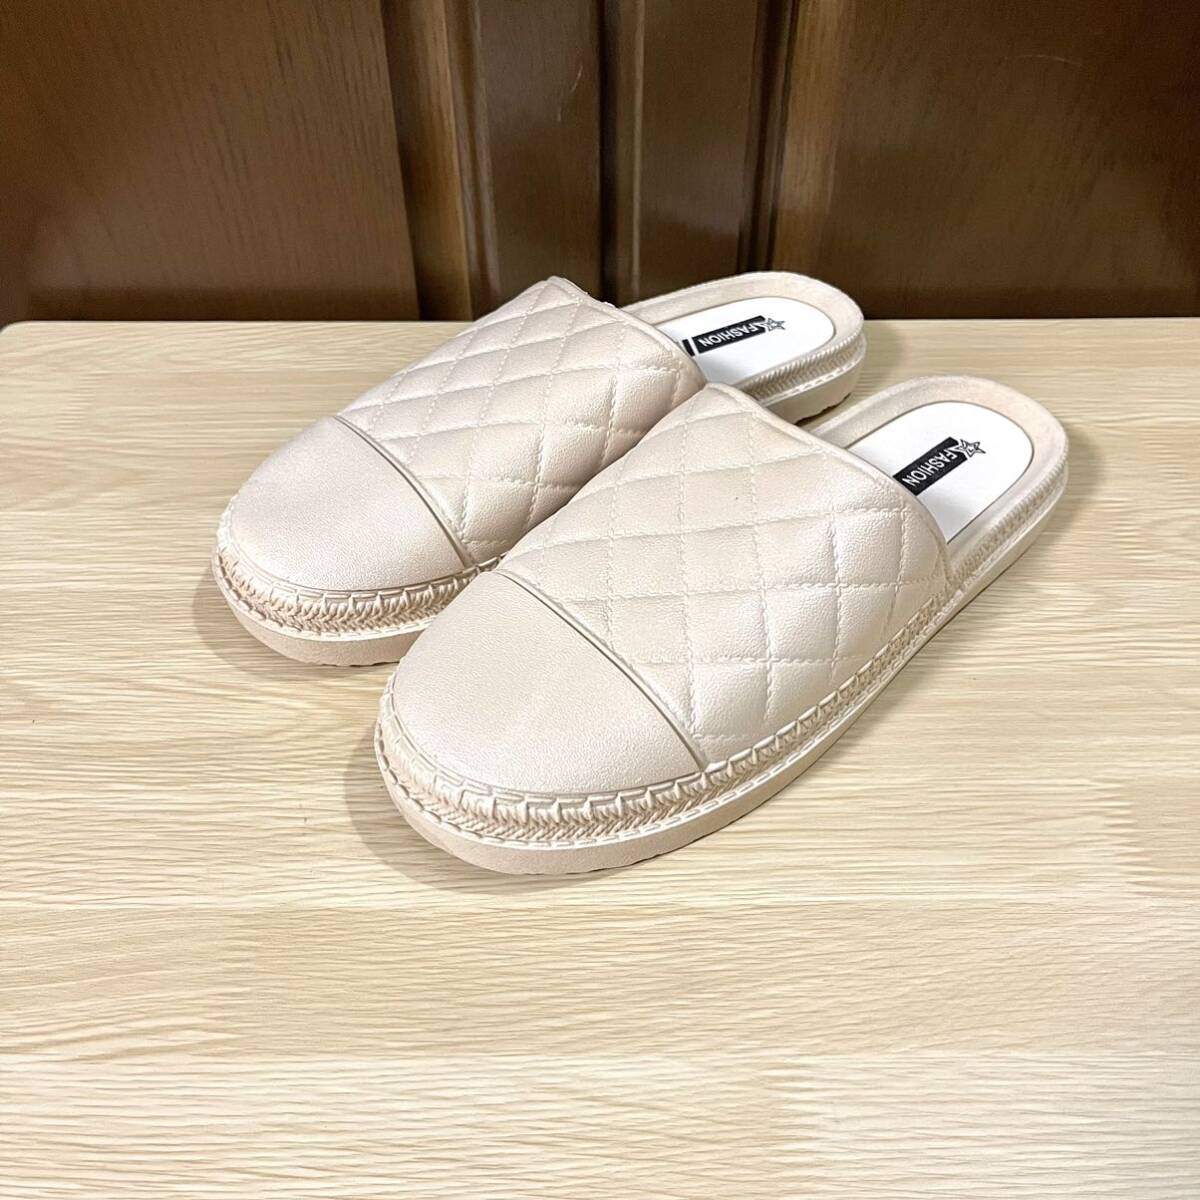  sandals lady's shower sandals out put on footwear veranda quilting design beige 24.5